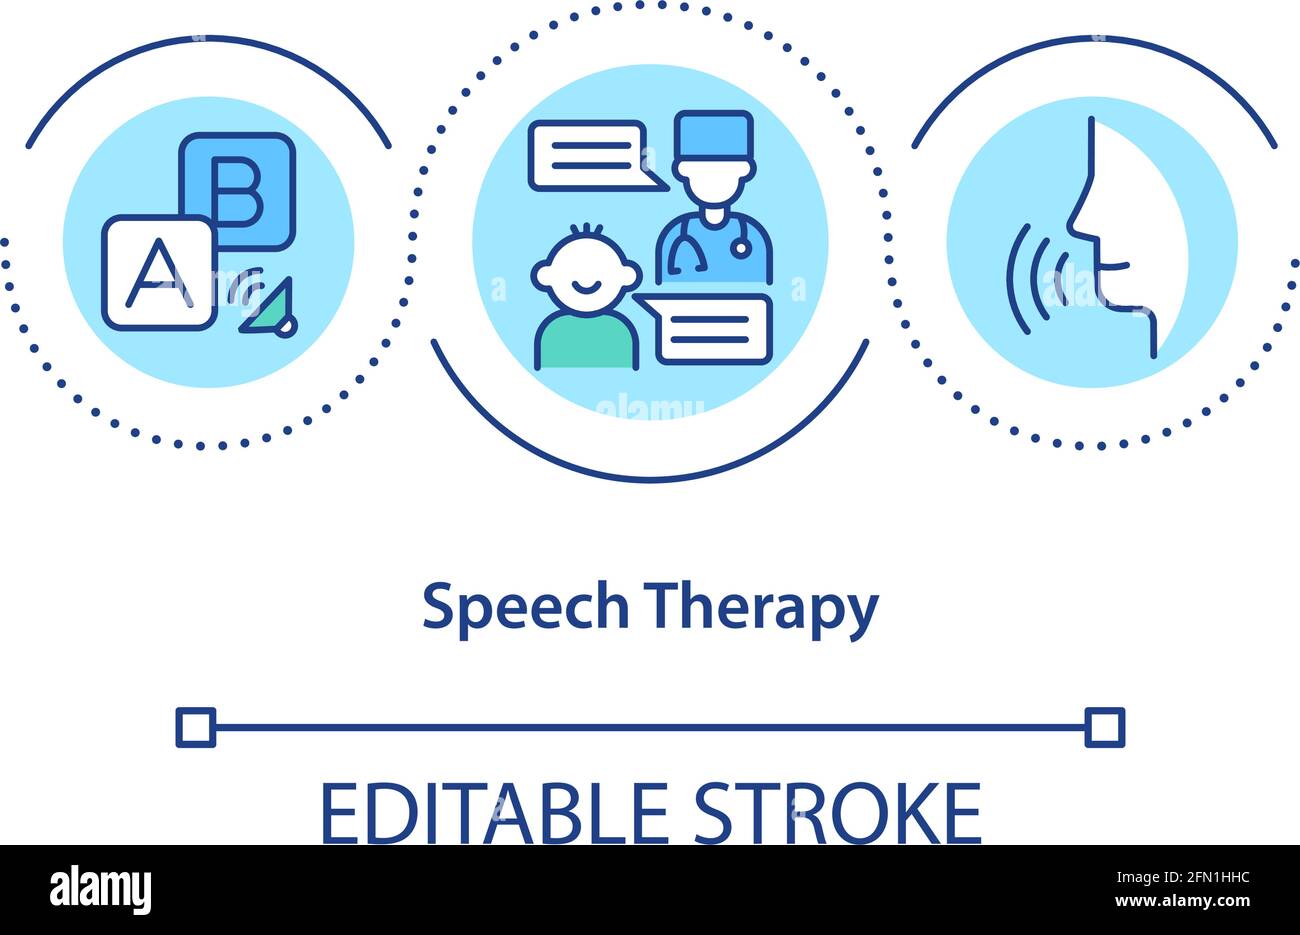 Speech therapy concept icon Stock Vector